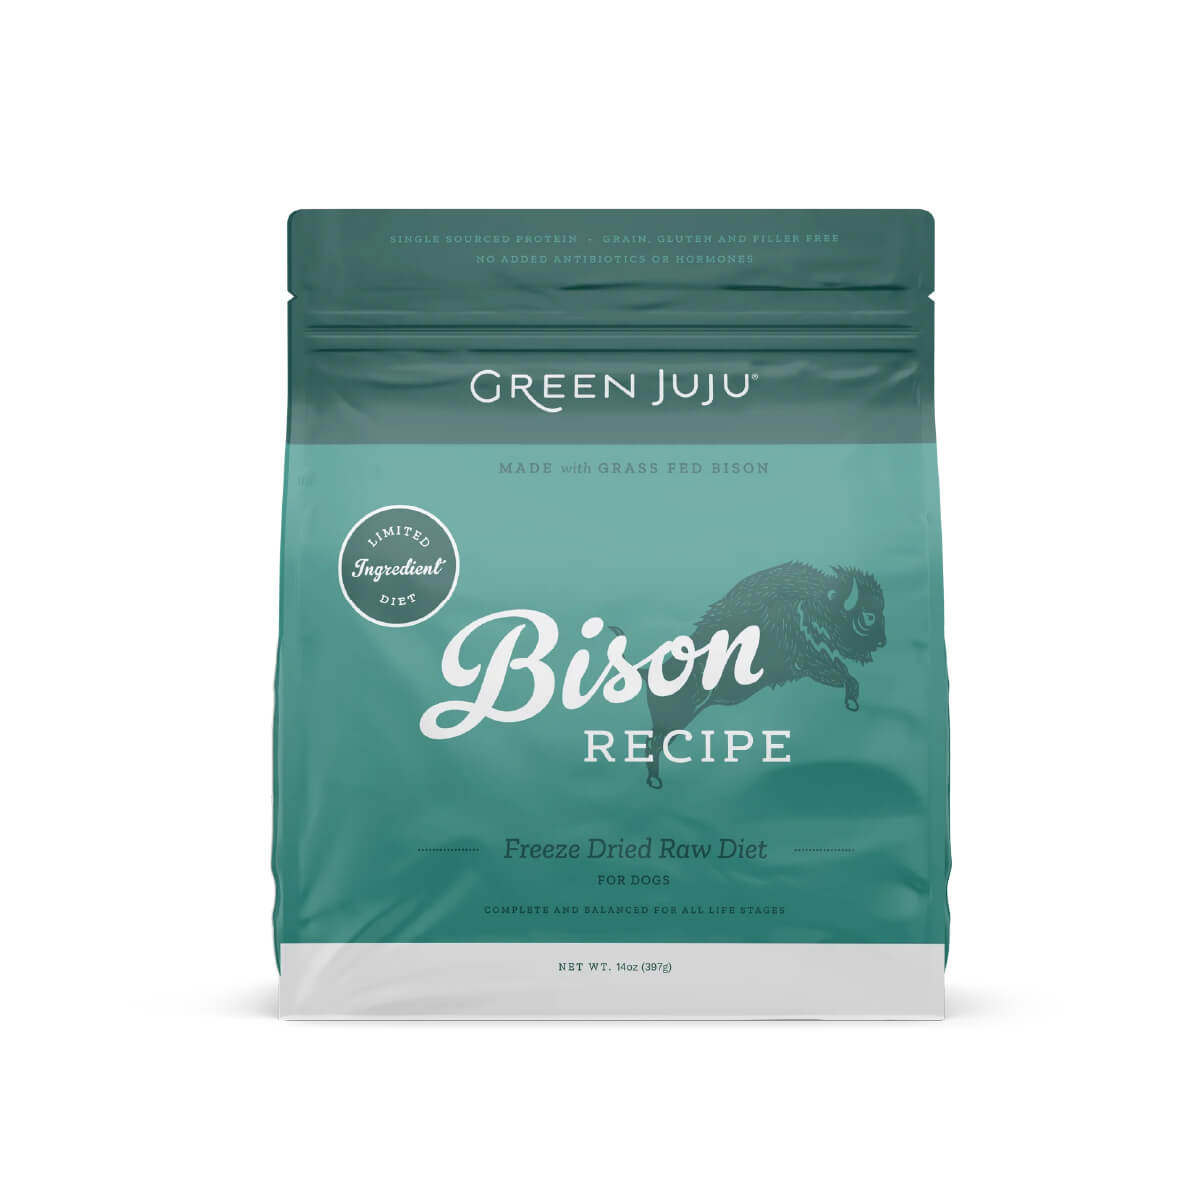 Green Juju Freeze-dried Raw Food | Bison